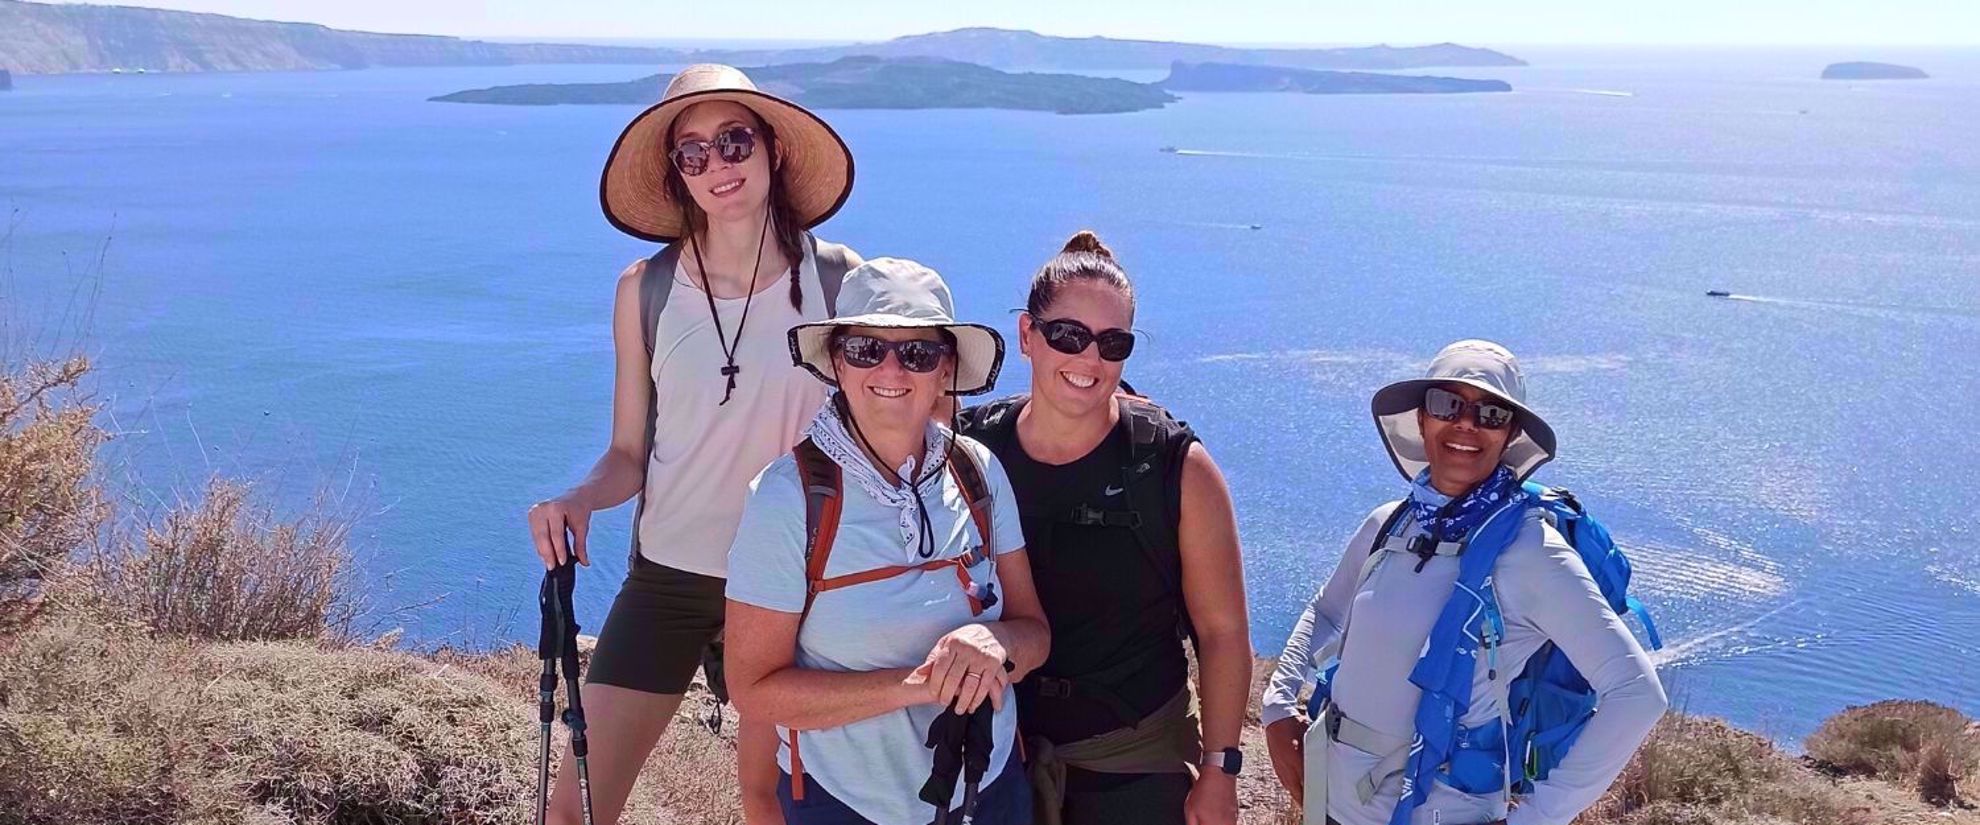 hiking the coast of a greek island